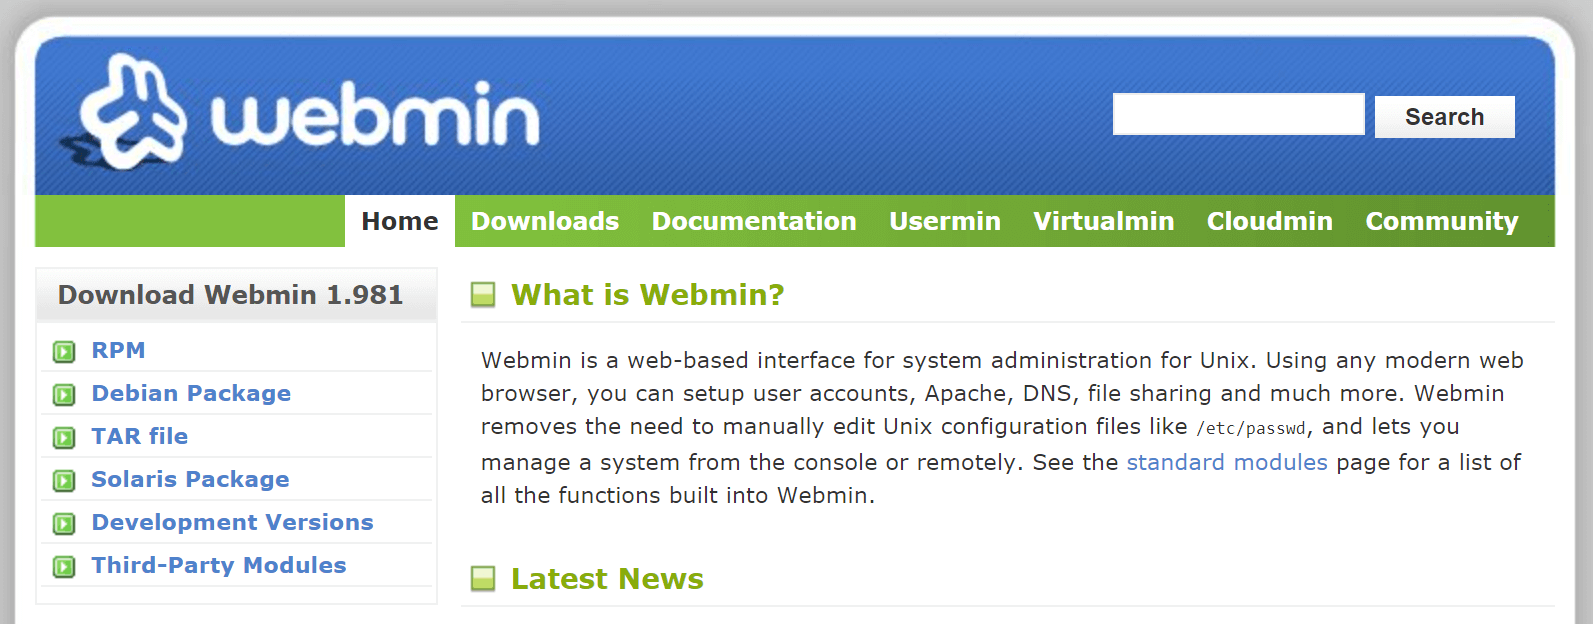 webmin-主頁